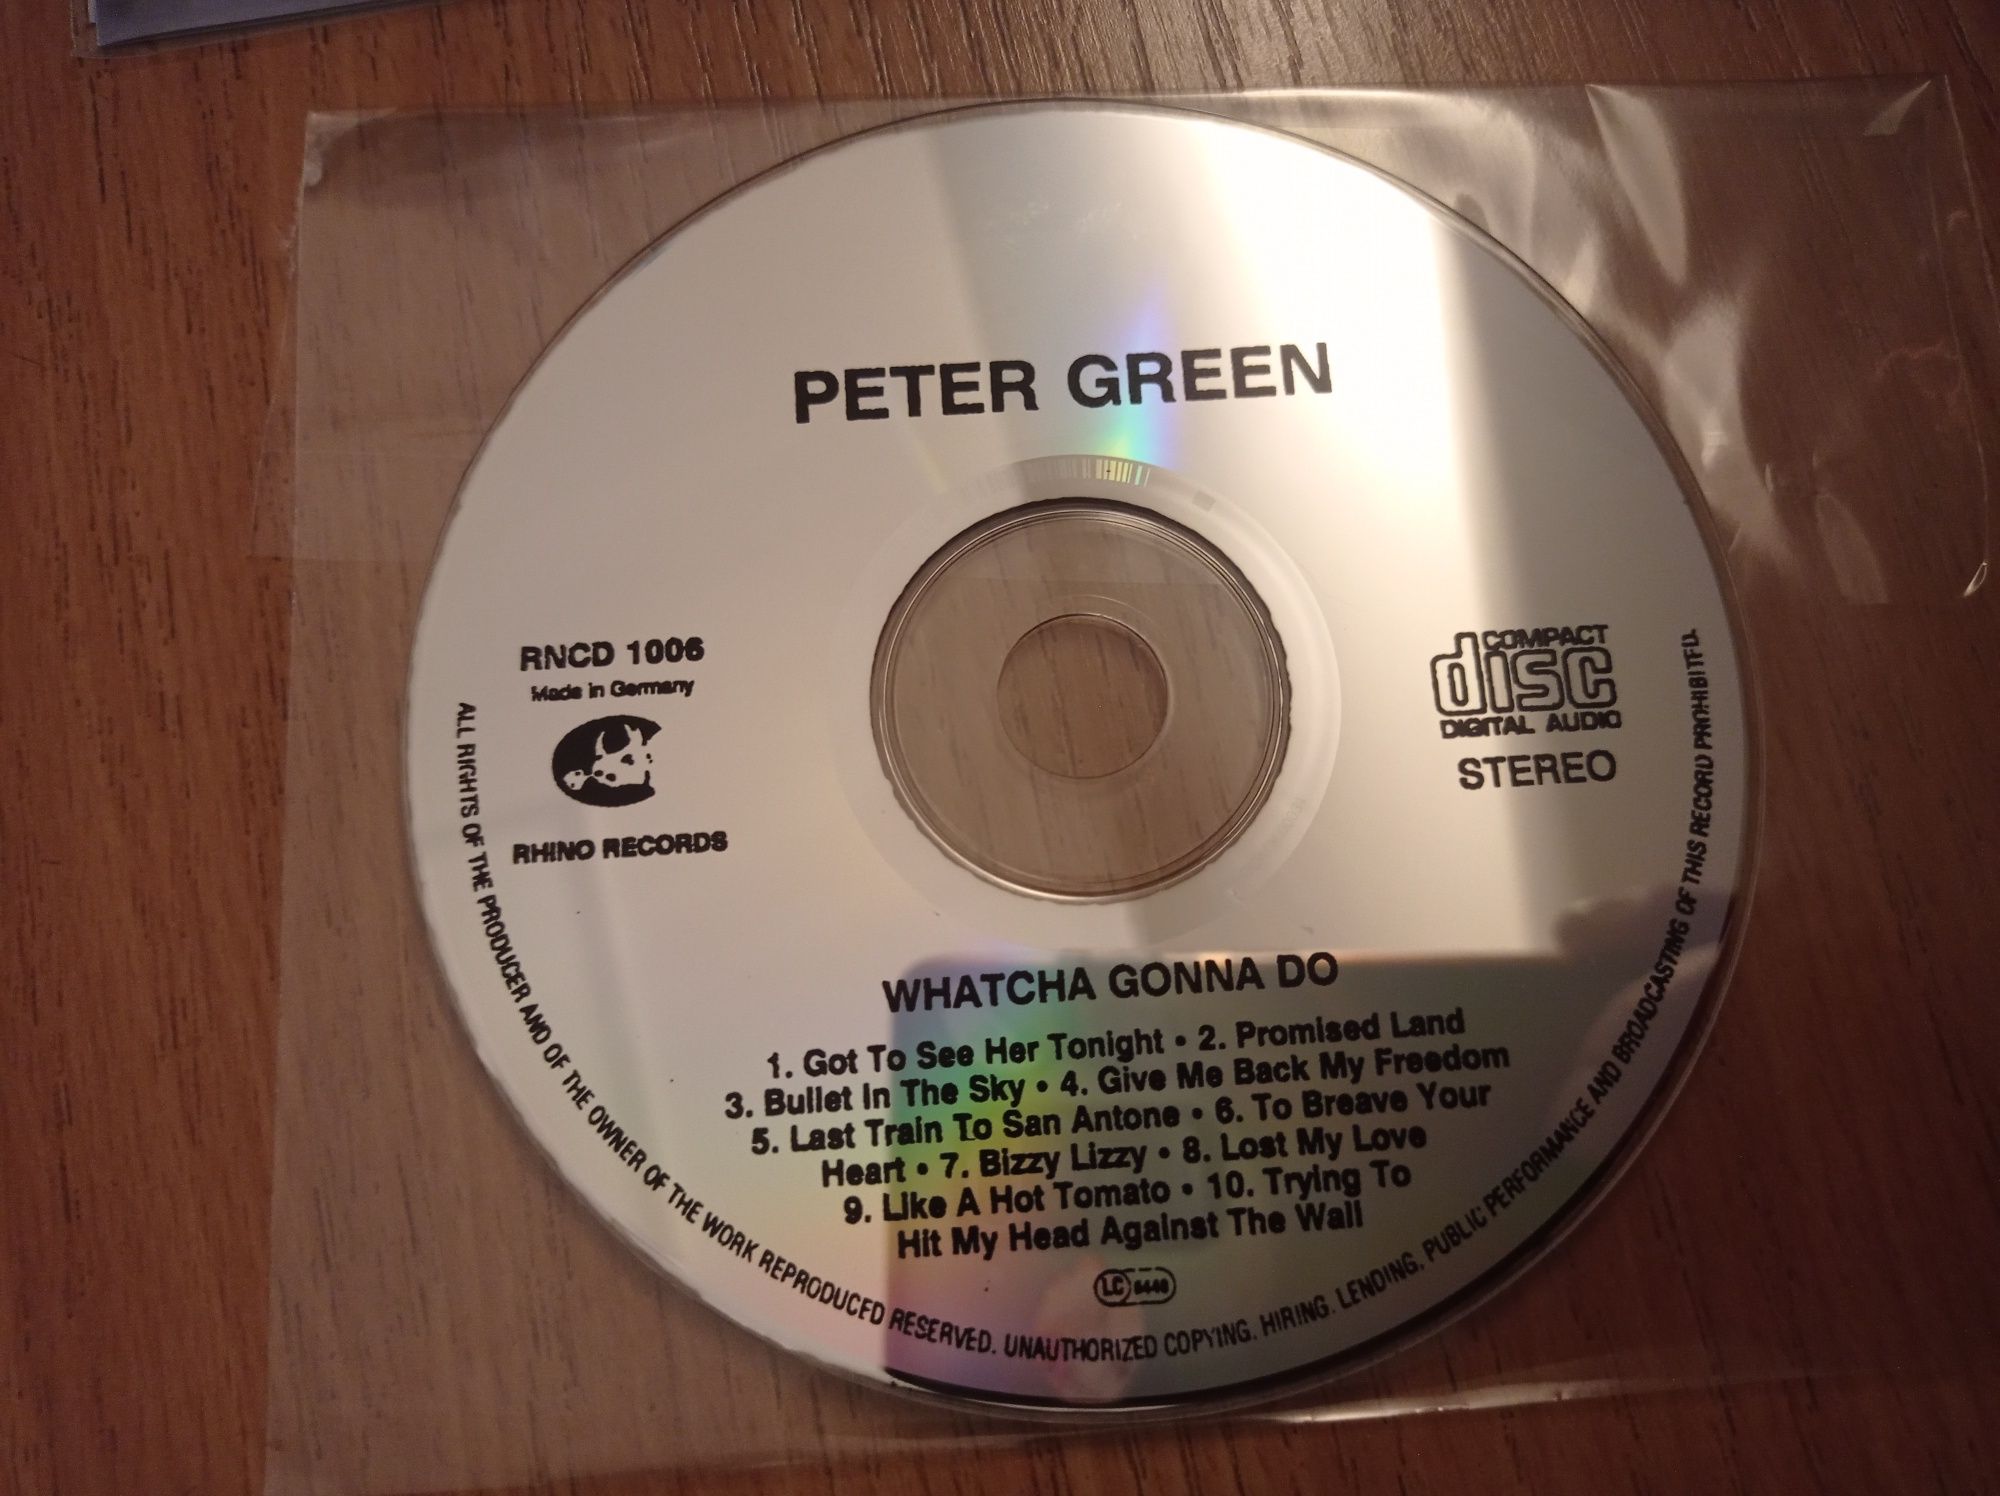 Peter Green - Wysycha gonna do